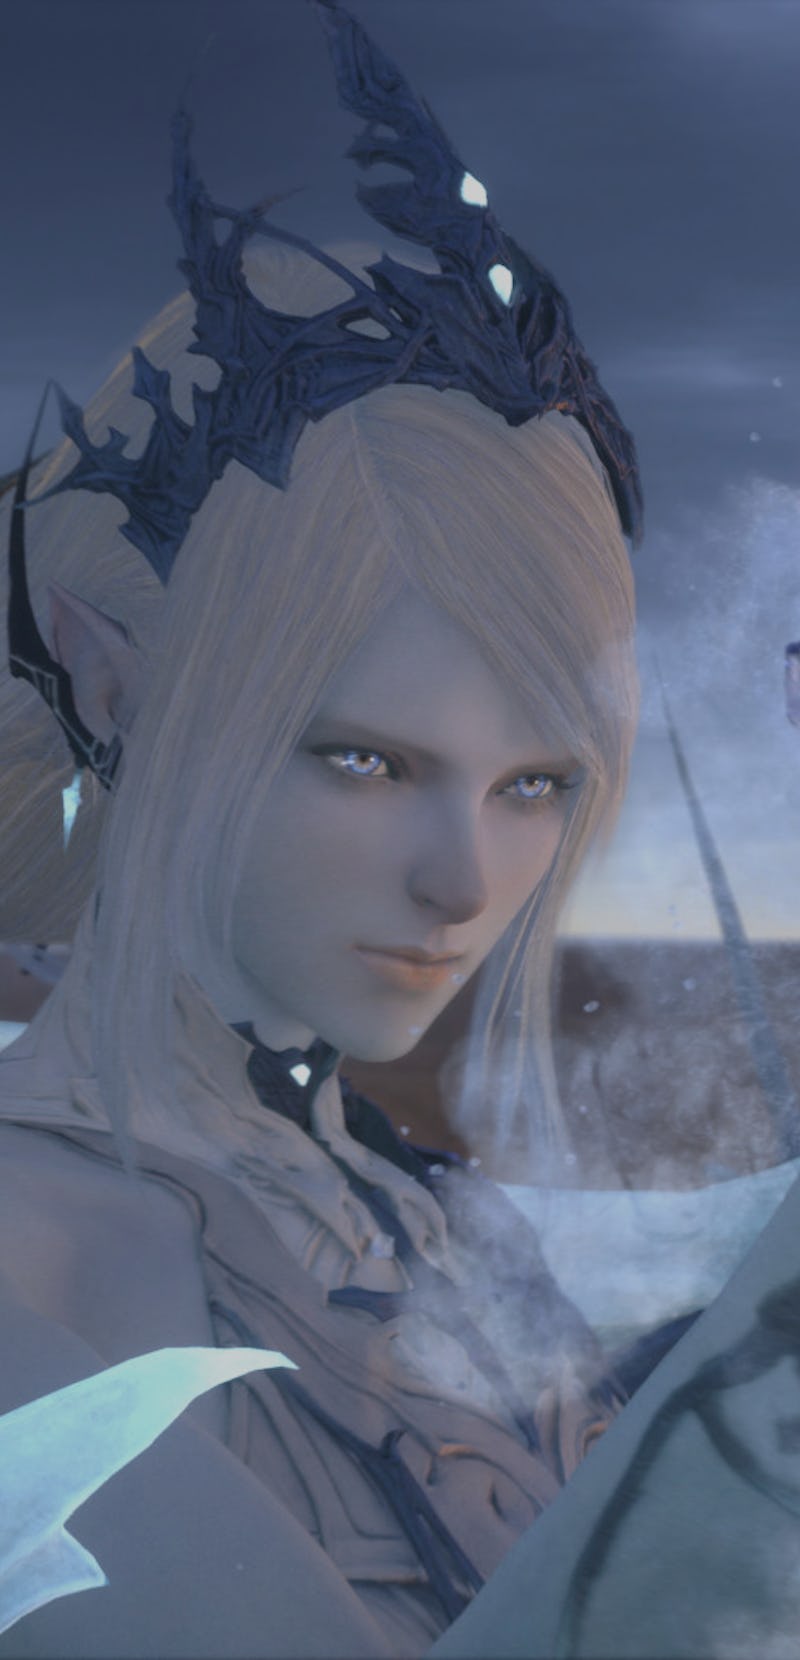 screenshot from Final Fantasy 16